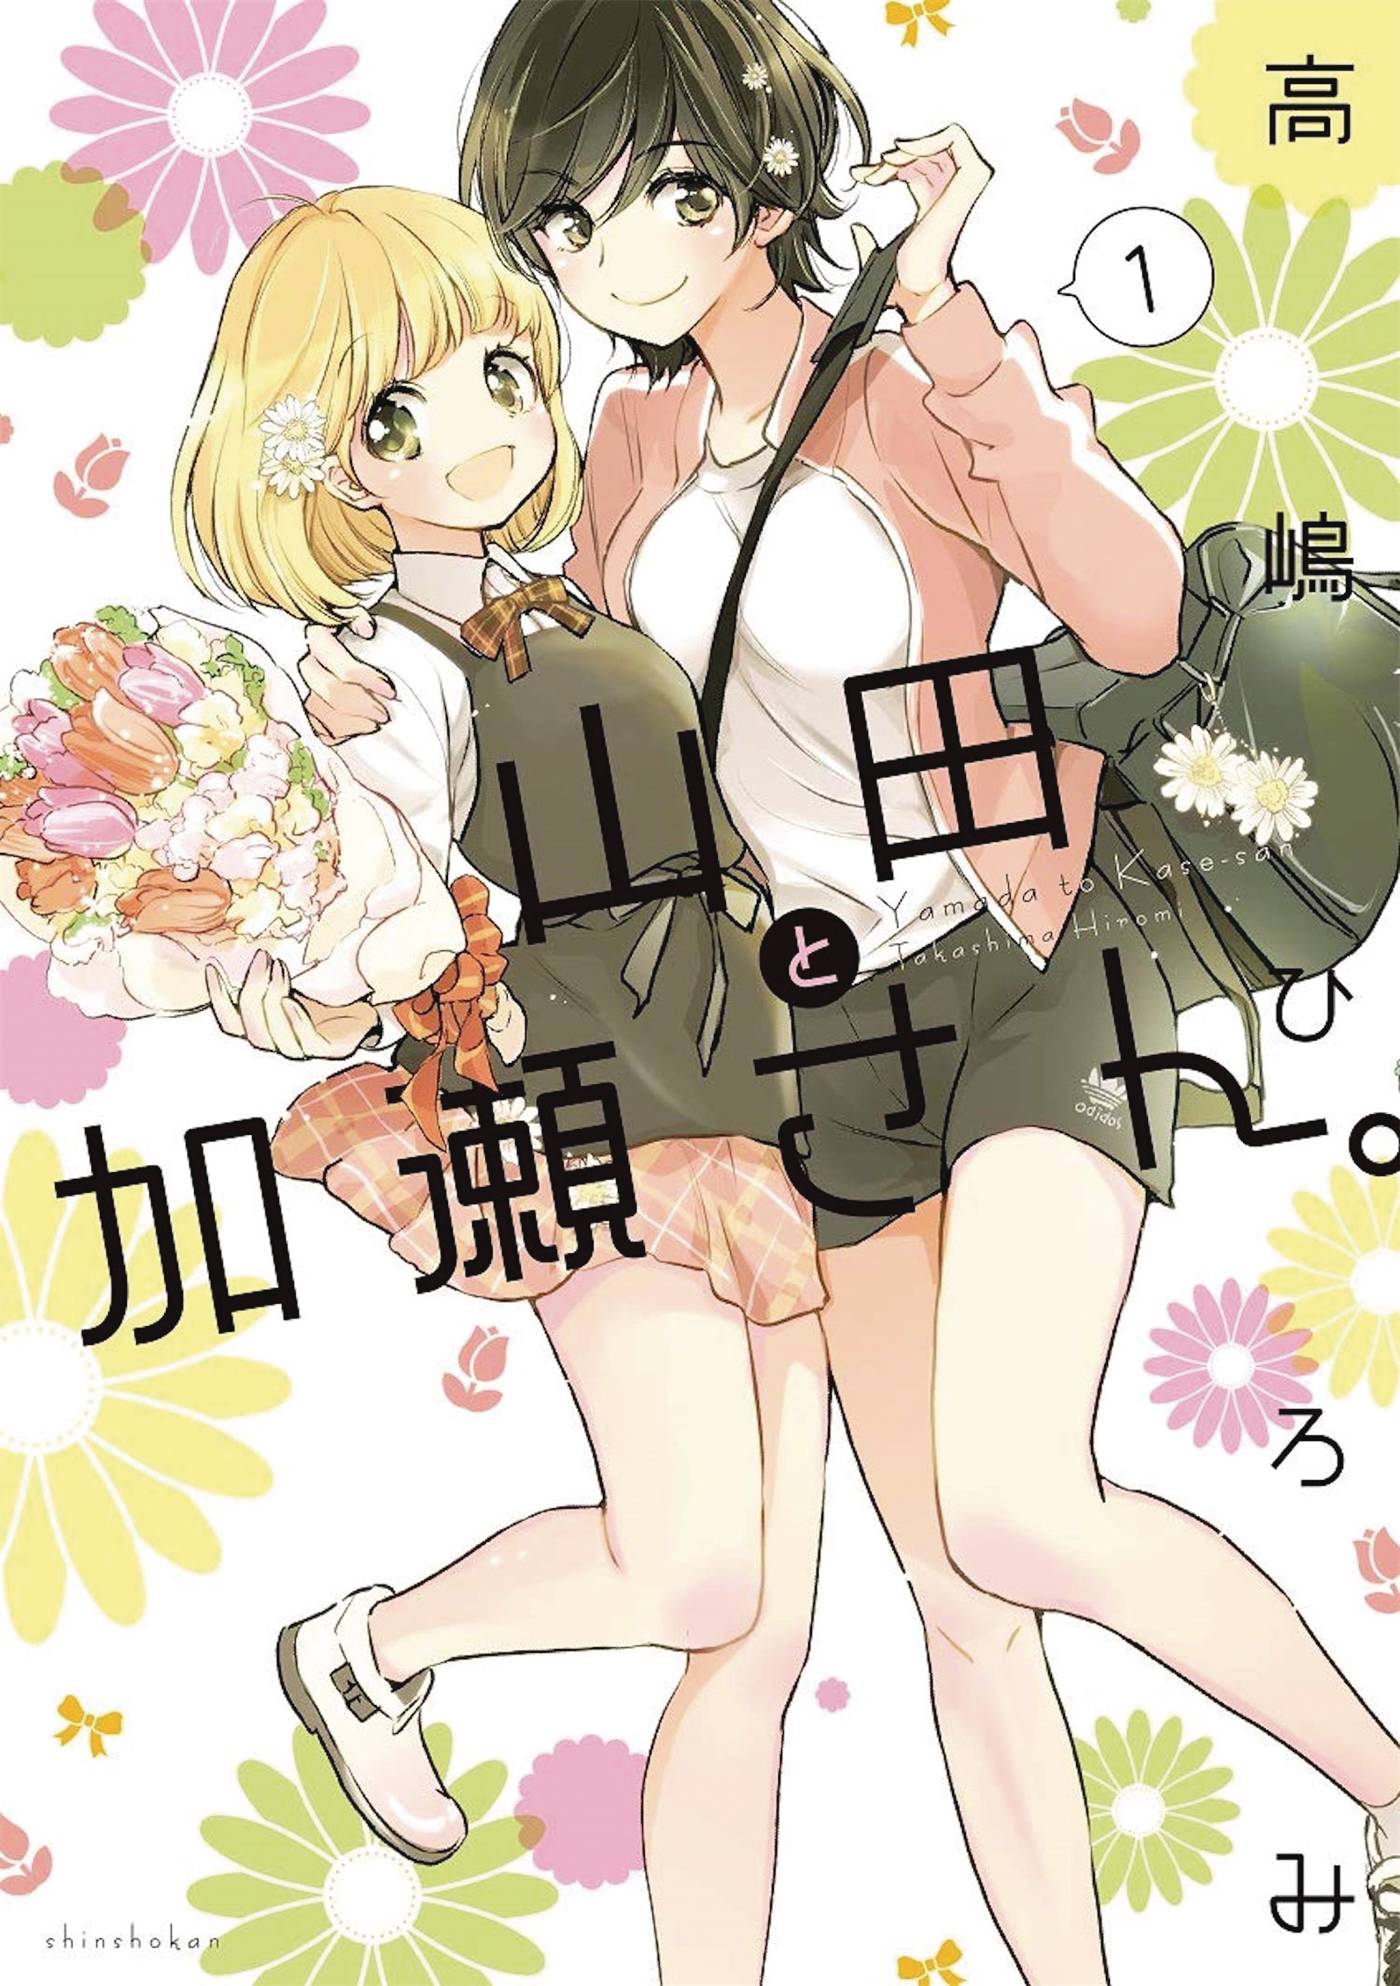 Kasesan & Yamada Manga Volume 1